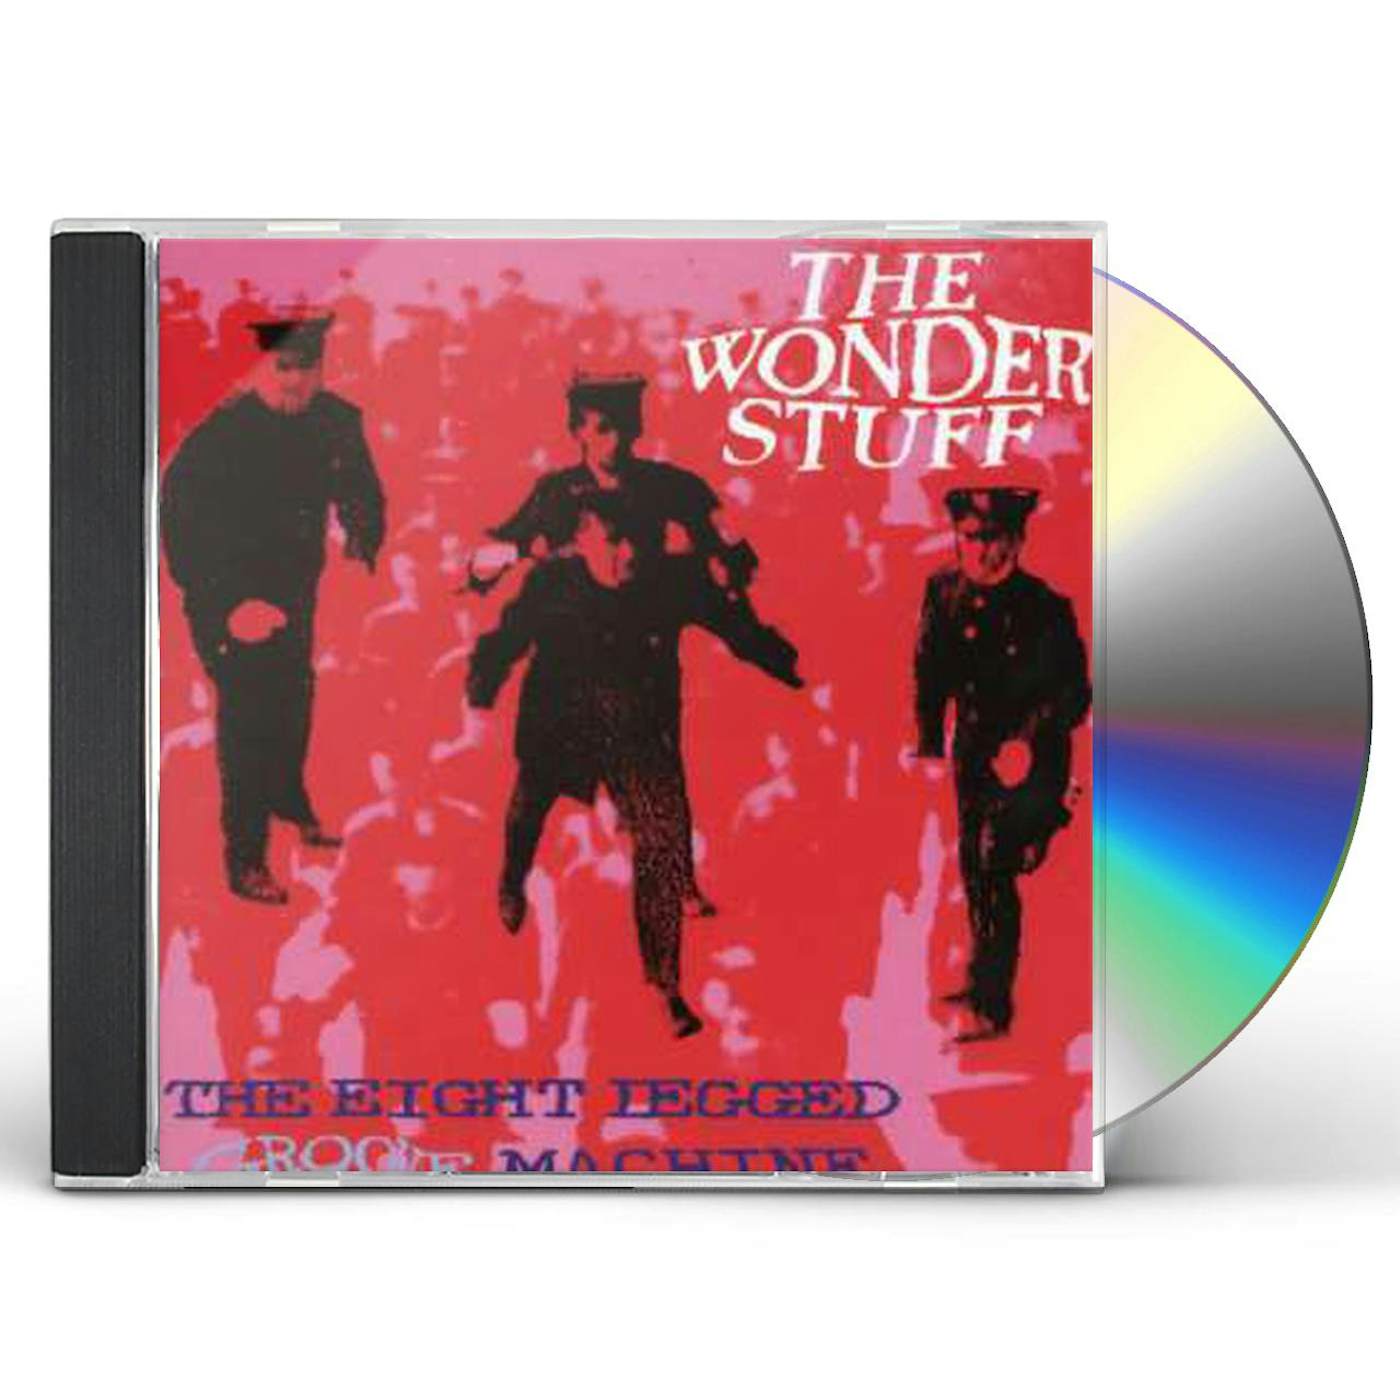 The Wonder Stuff EIGHT LEGGED GROOVE MACHINE CD